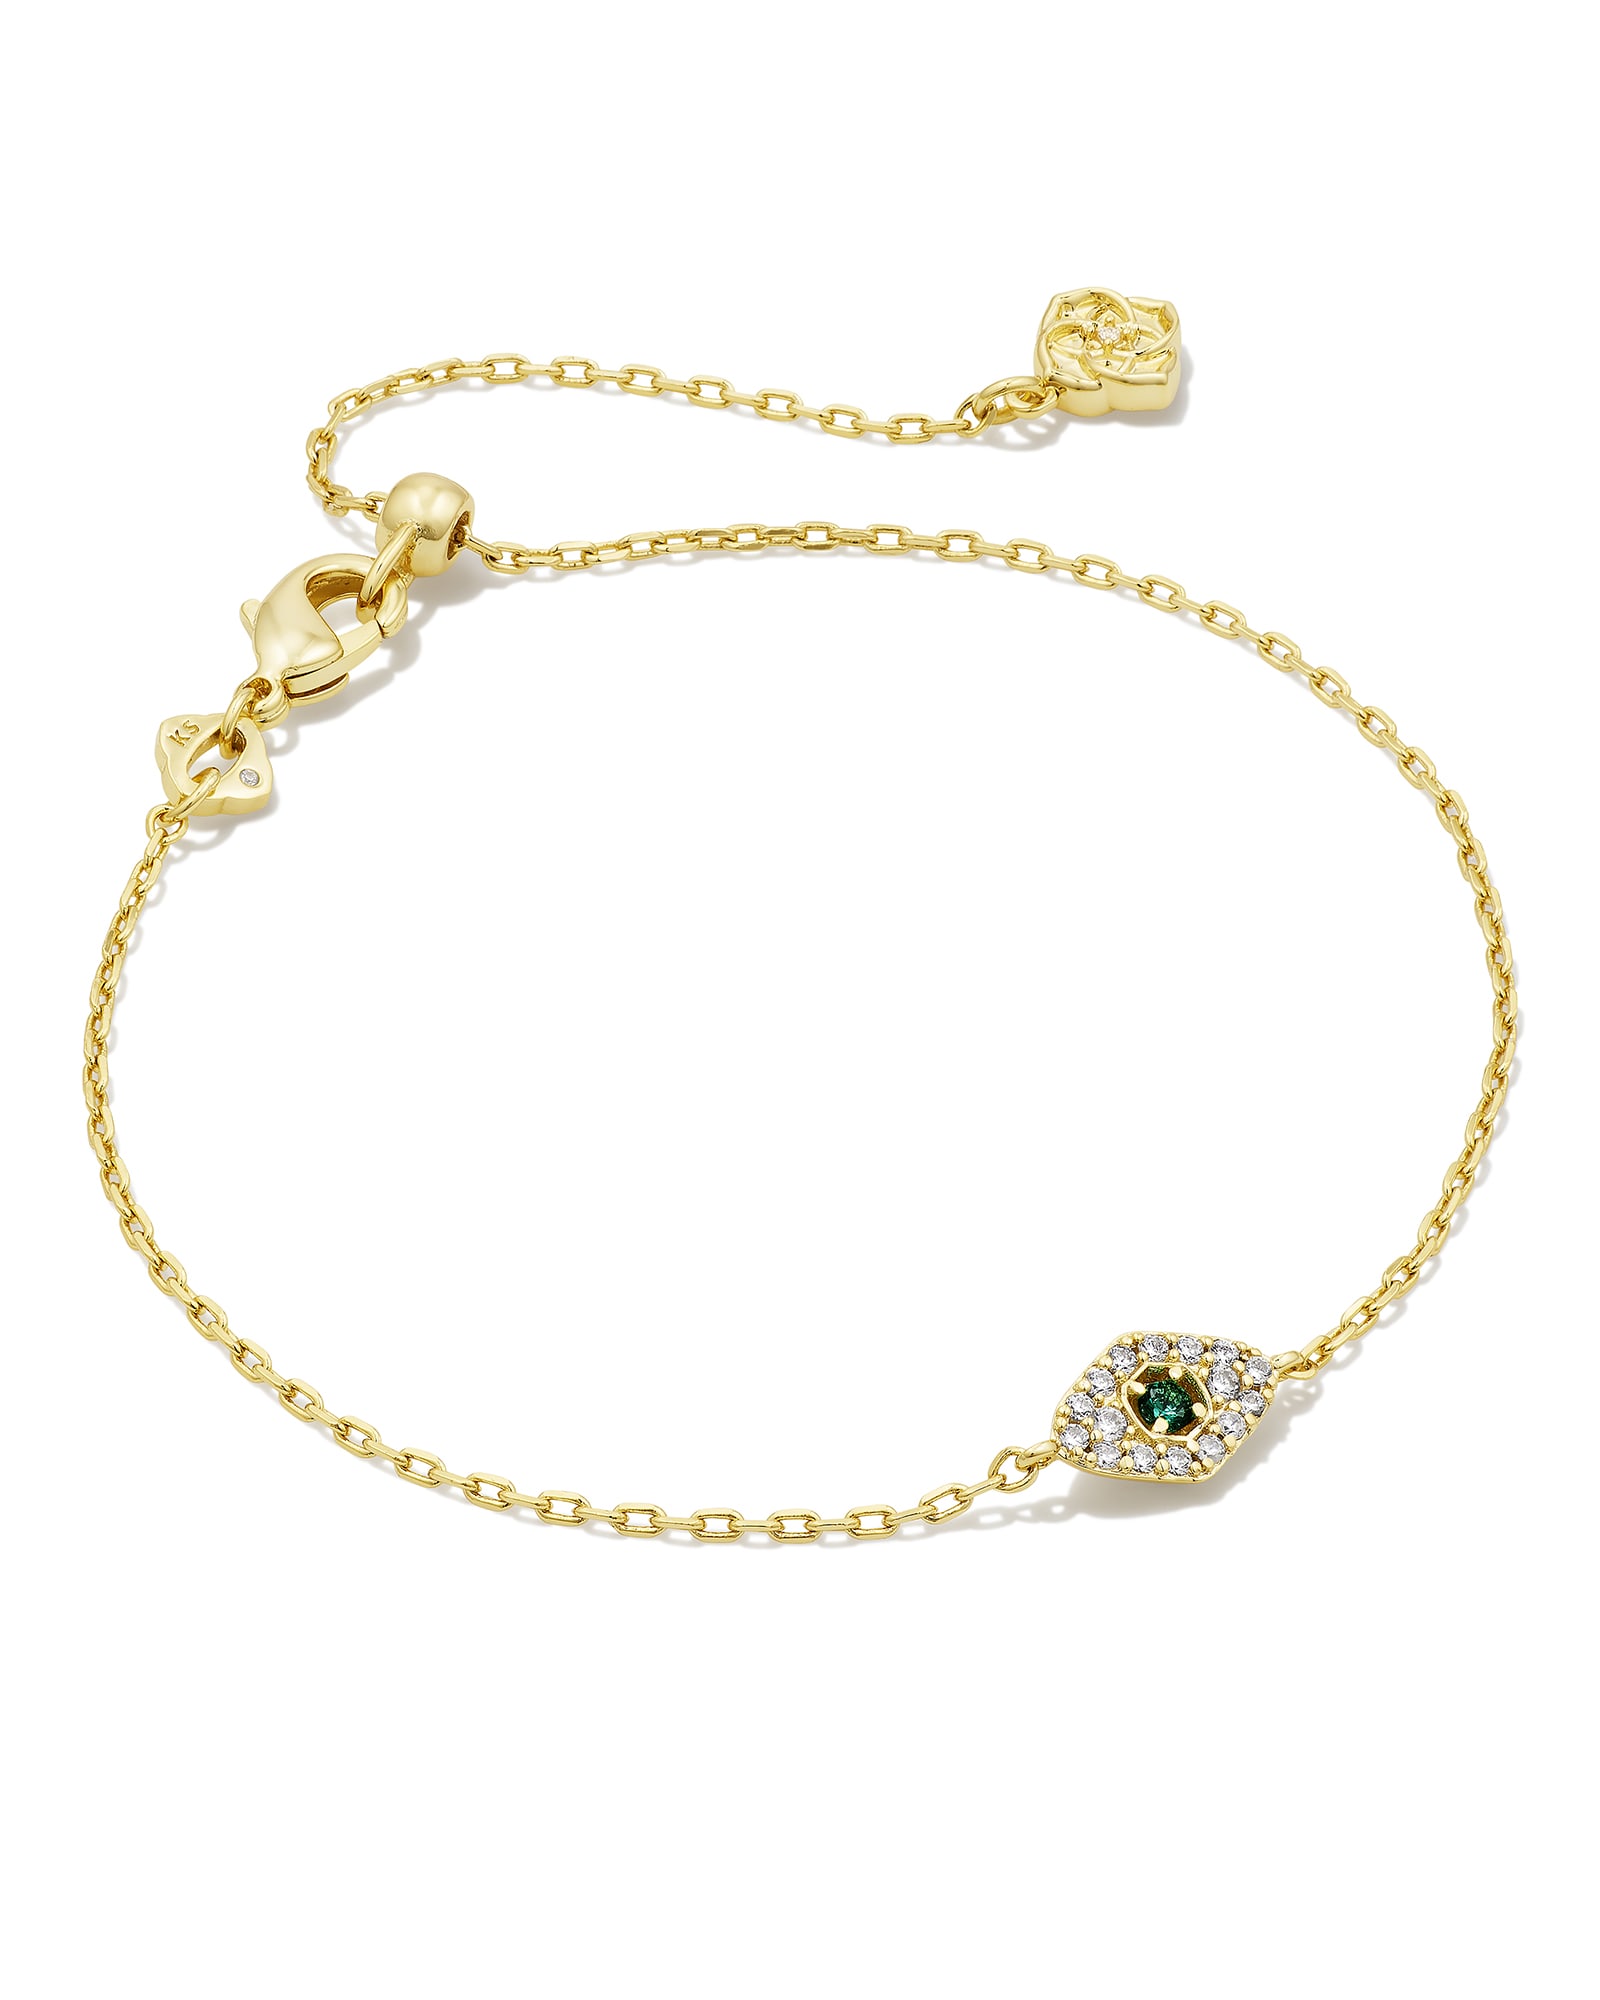 Ashrafa Gold Eye Delicate Chain Bracelet in Green Crystal Mix | Kendra Scott